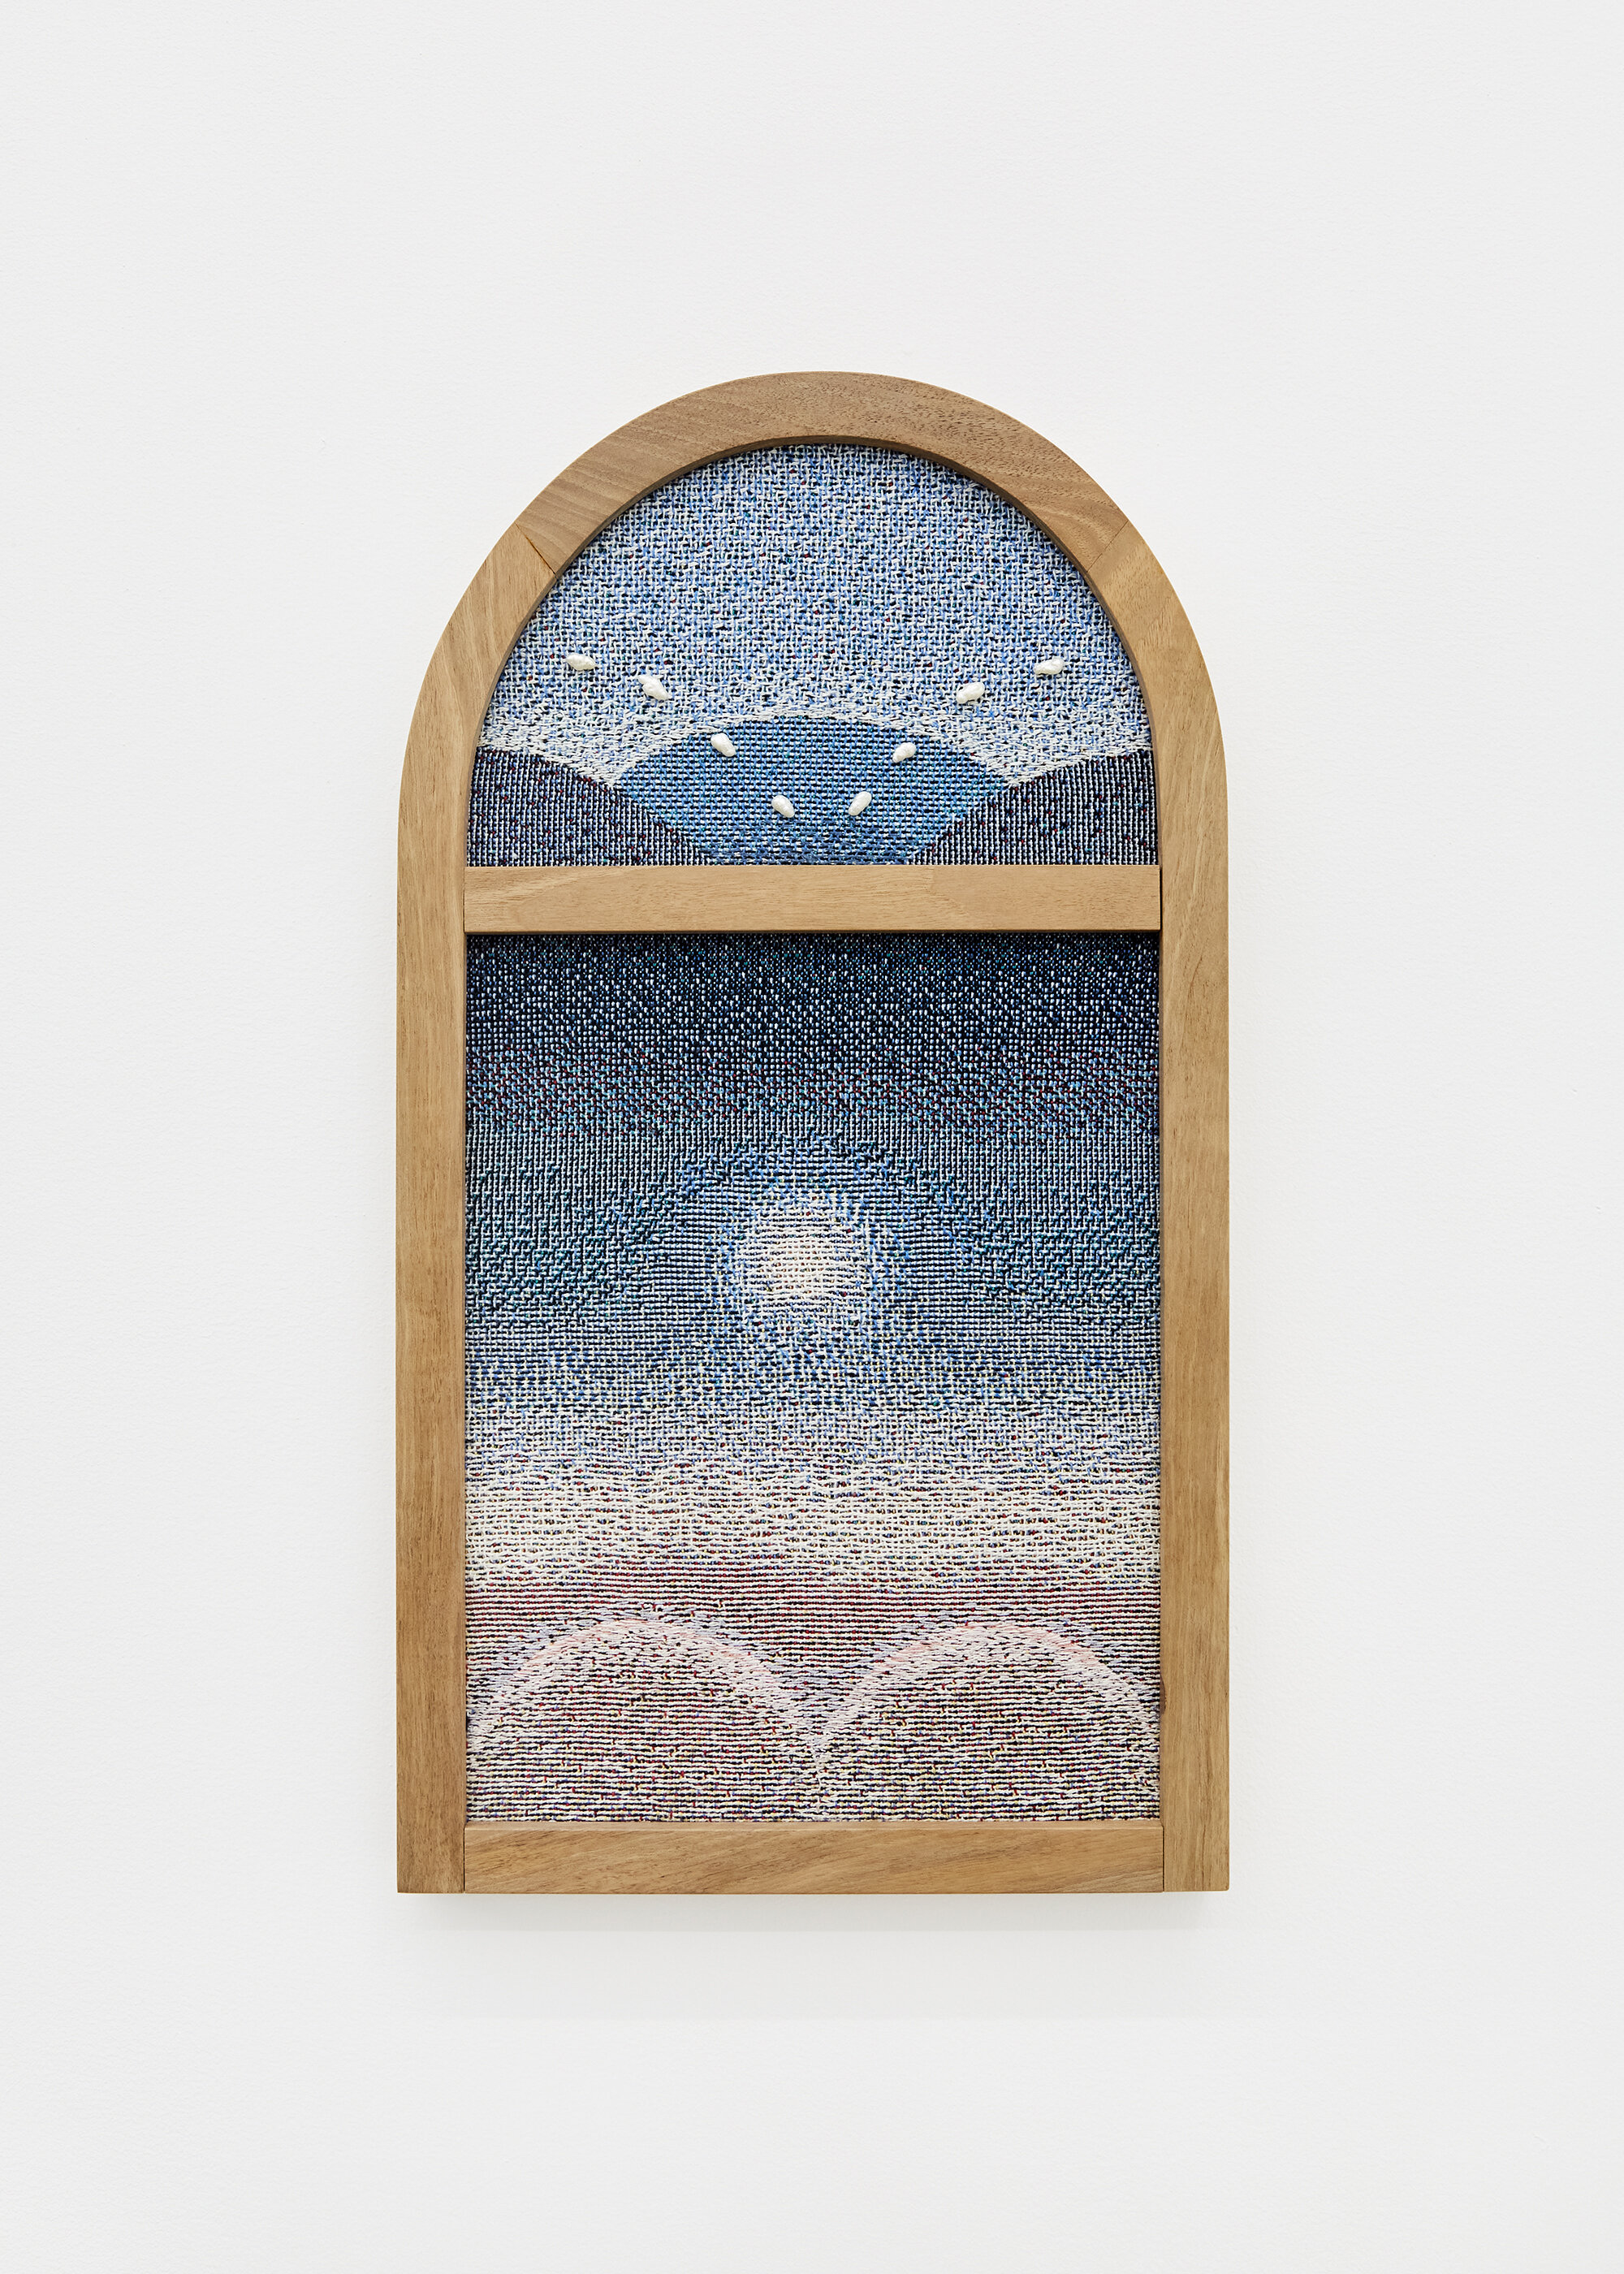  Charlotte Edey,  Altar , 2020. Woven jacquard tapestry, silk, cotton, freshwater pearls, walnut frame, 24 x 47 cm  